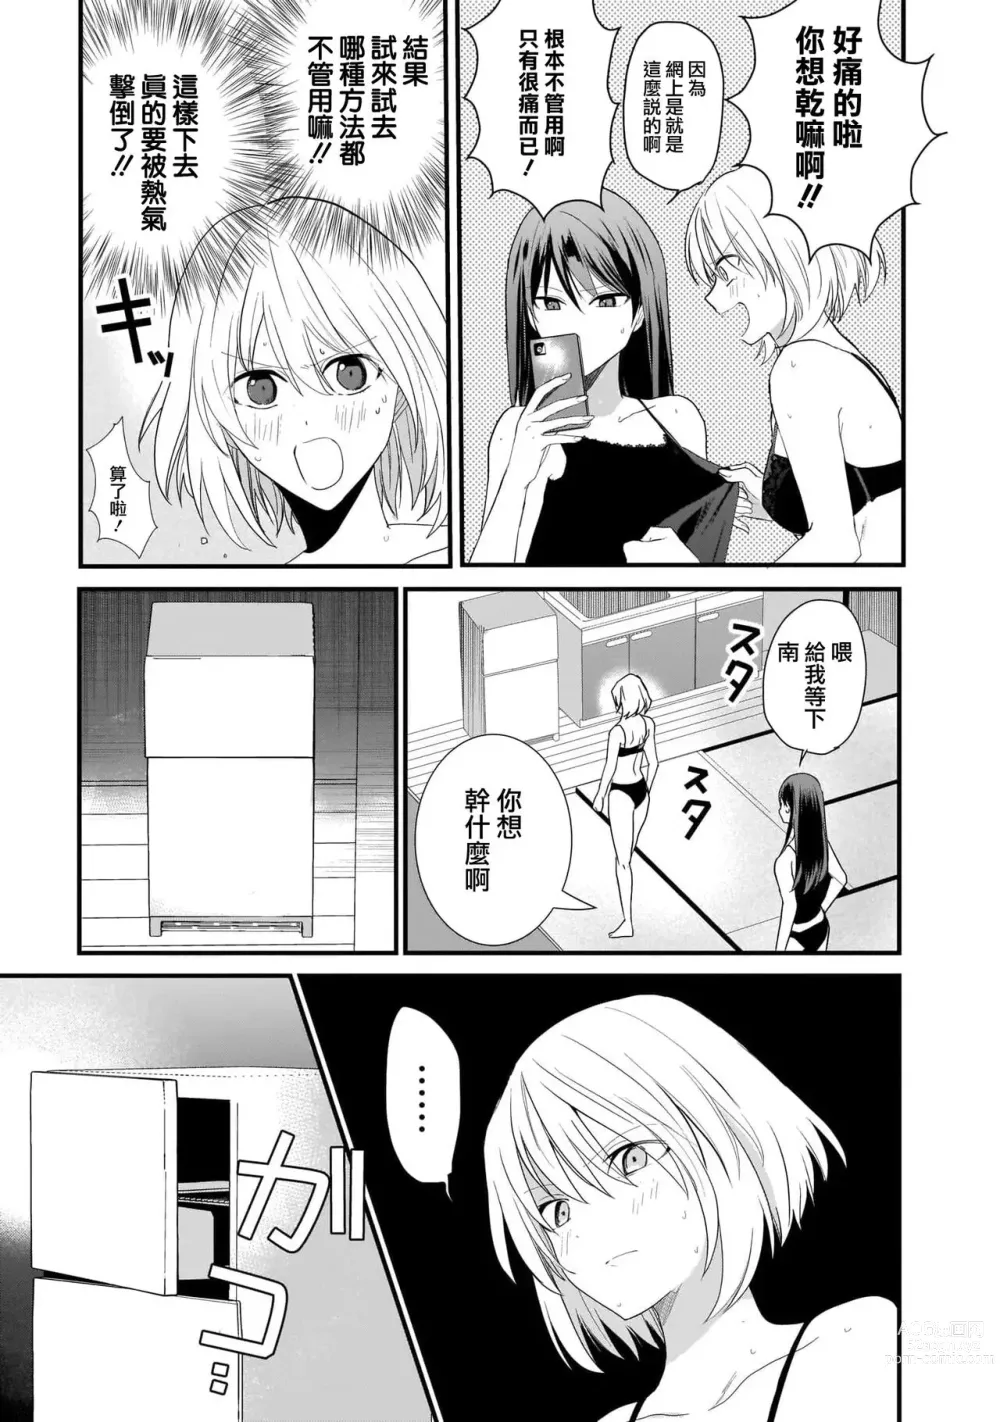 Page 6 of manga 冷却运动